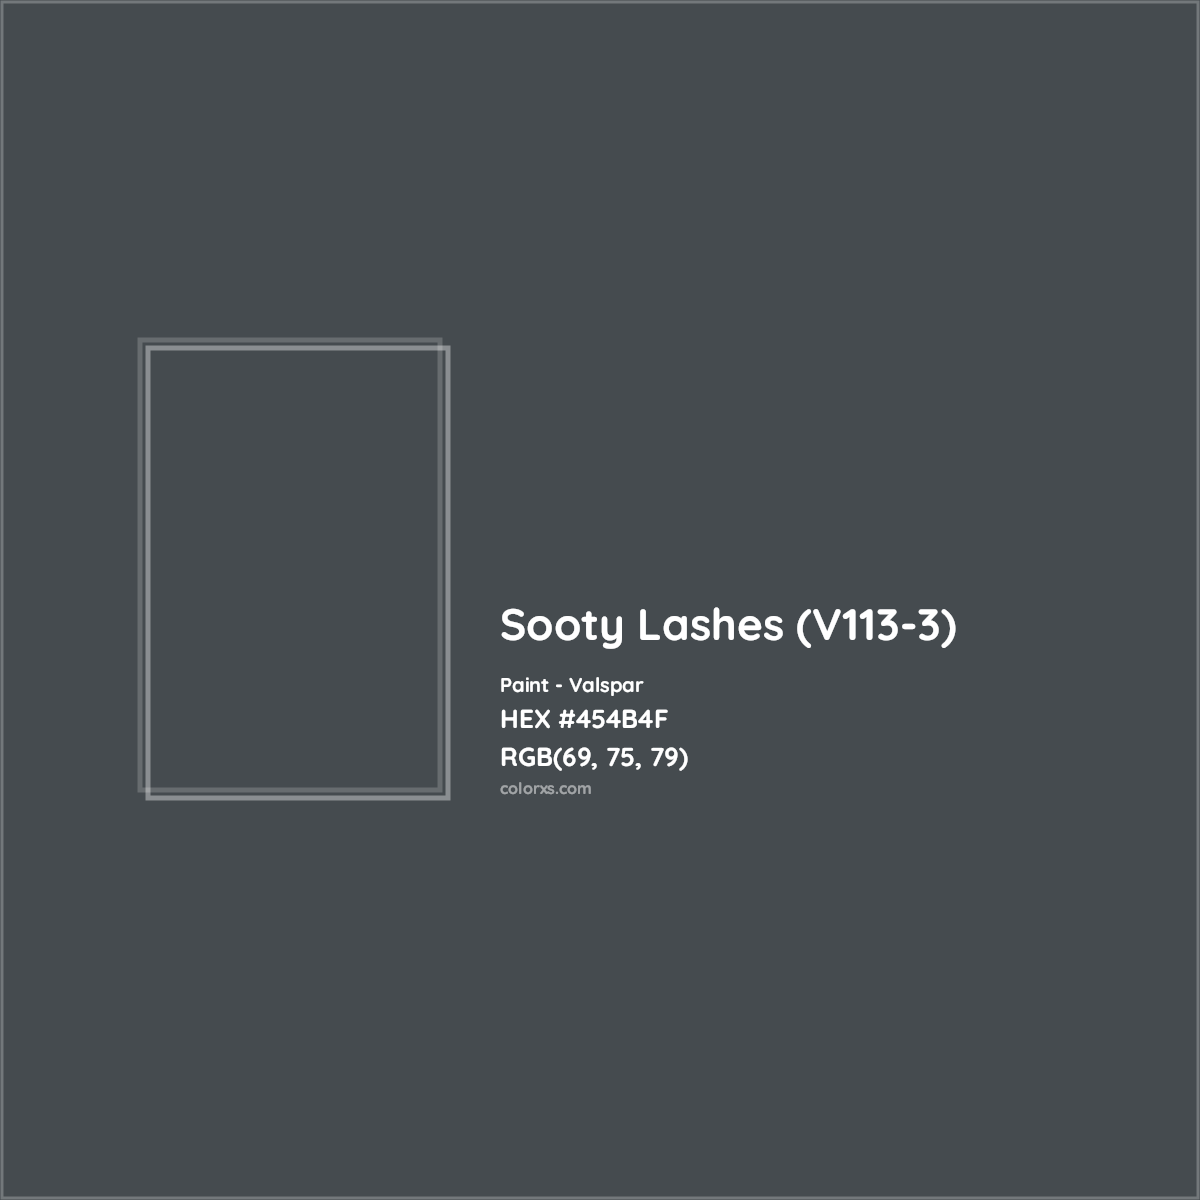 HEX #454B4F Sooty Lashes (V113-3) Paint Valspar - Color Code